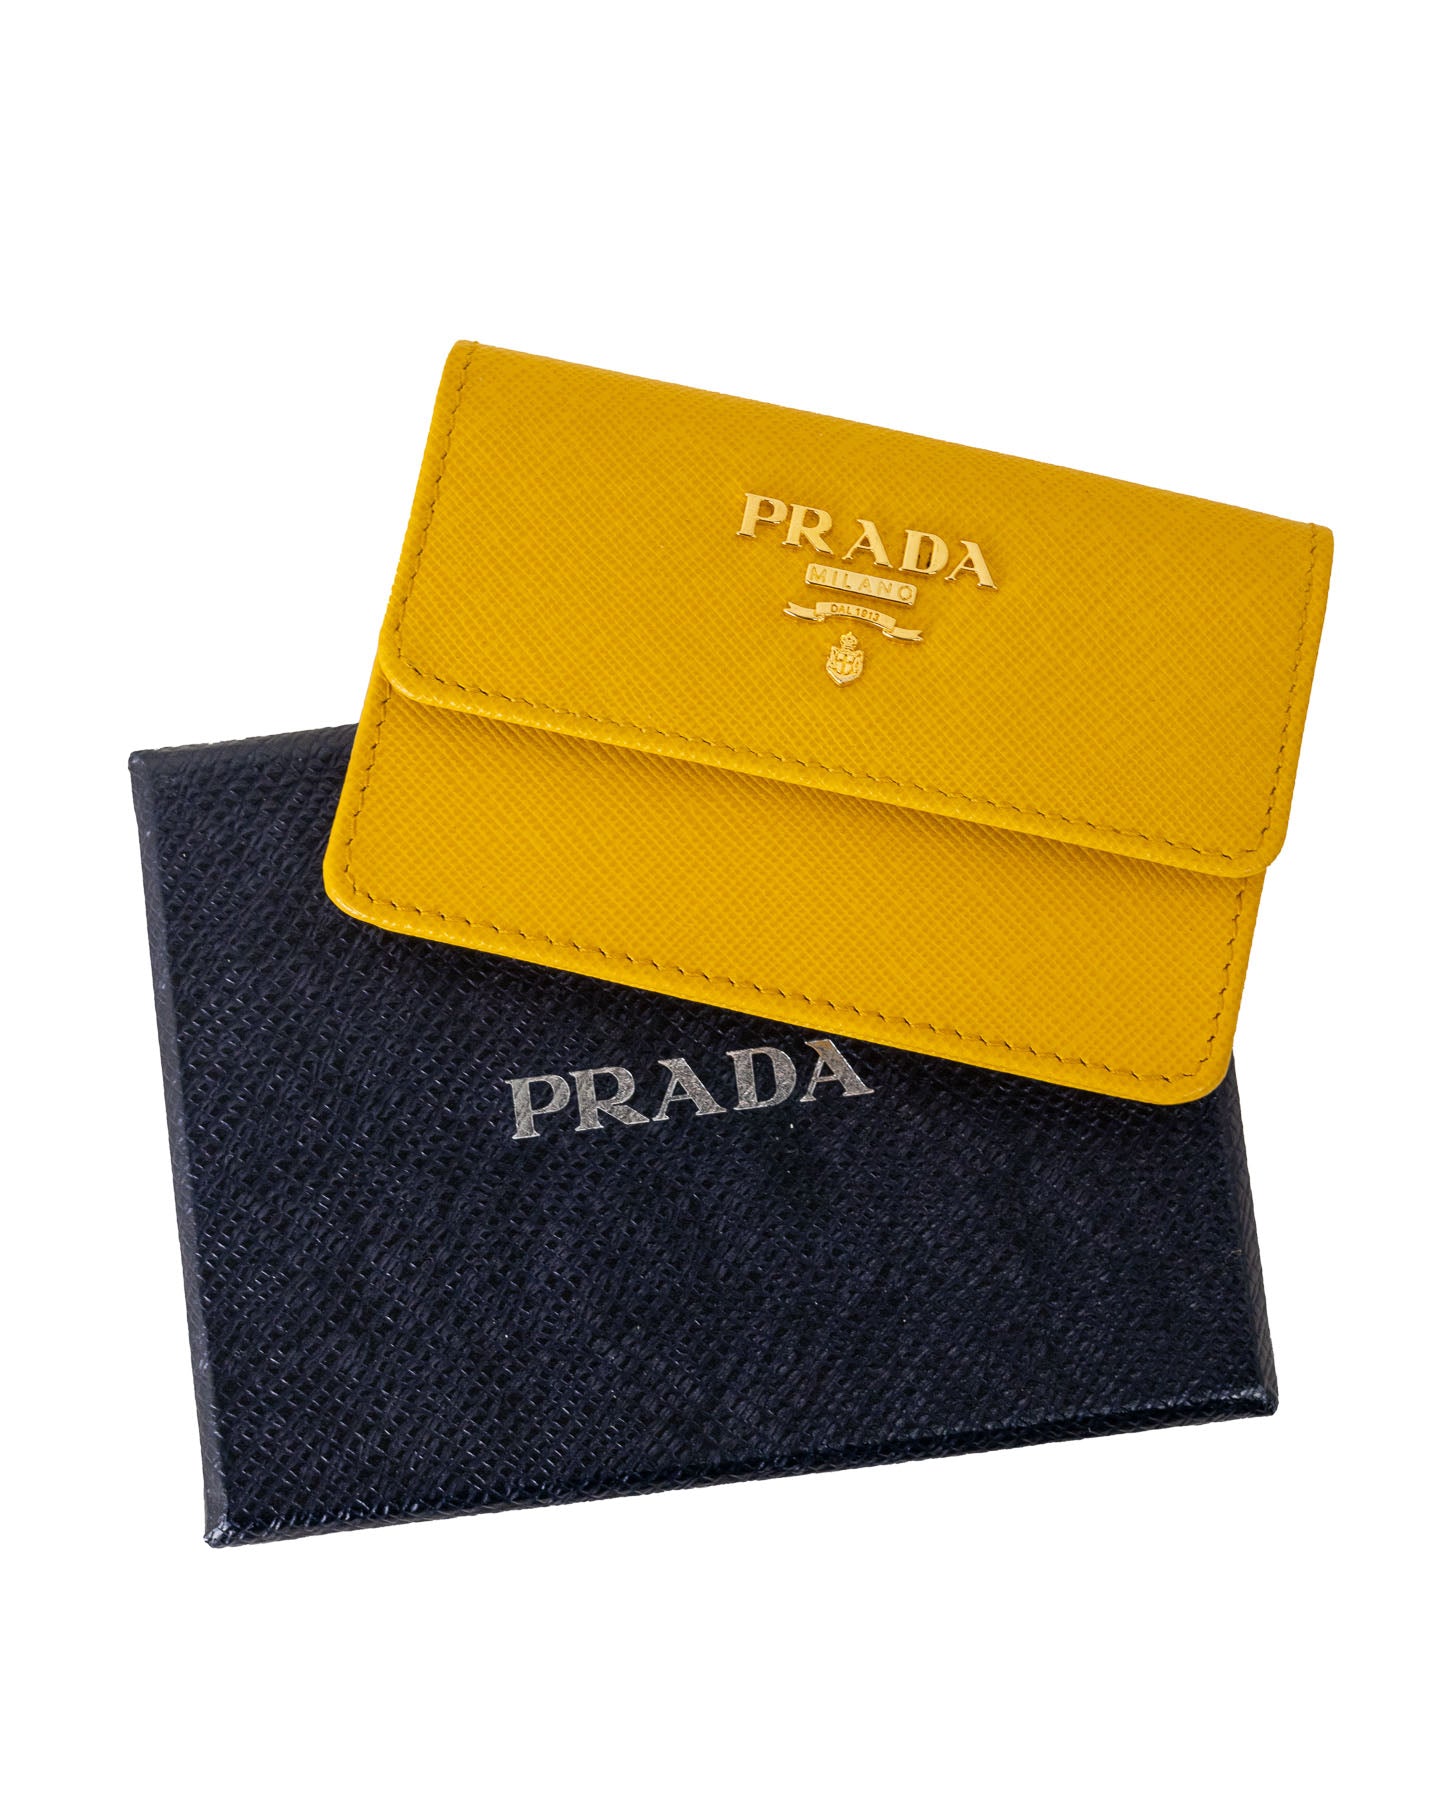 Prada Saffiano Yellow Card Holder